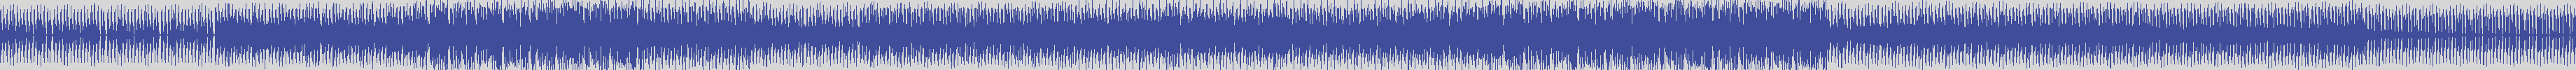 atomic_recordings [AR012] Xxl Century - Trax to Max [Magic Flux Remix] audio wave form